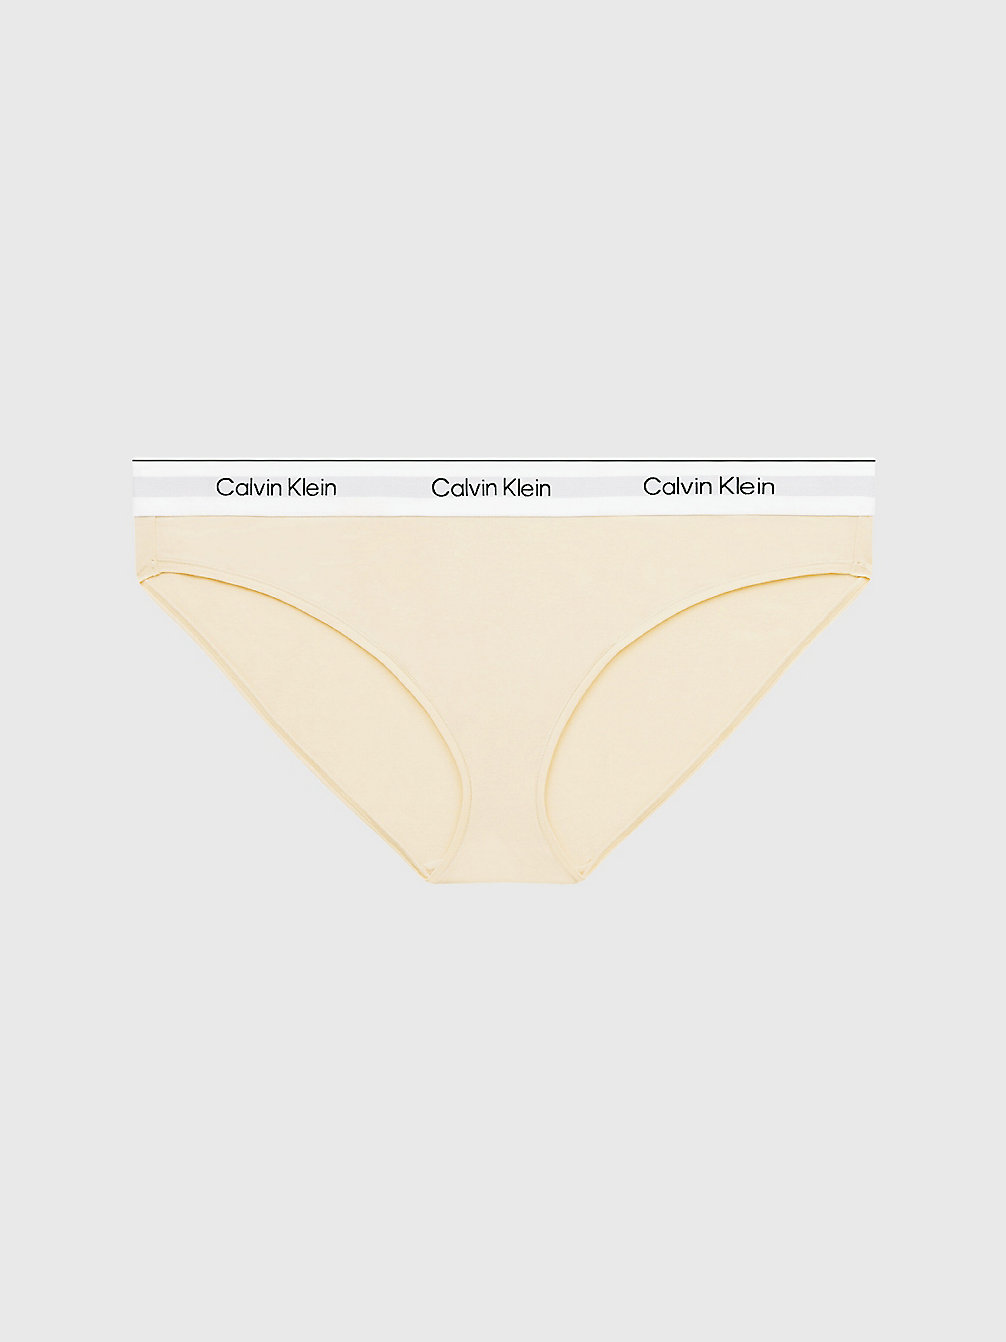 STONE > Figi Plus Size - Modern Cotton > undefined Kobiety - Calvin Klein